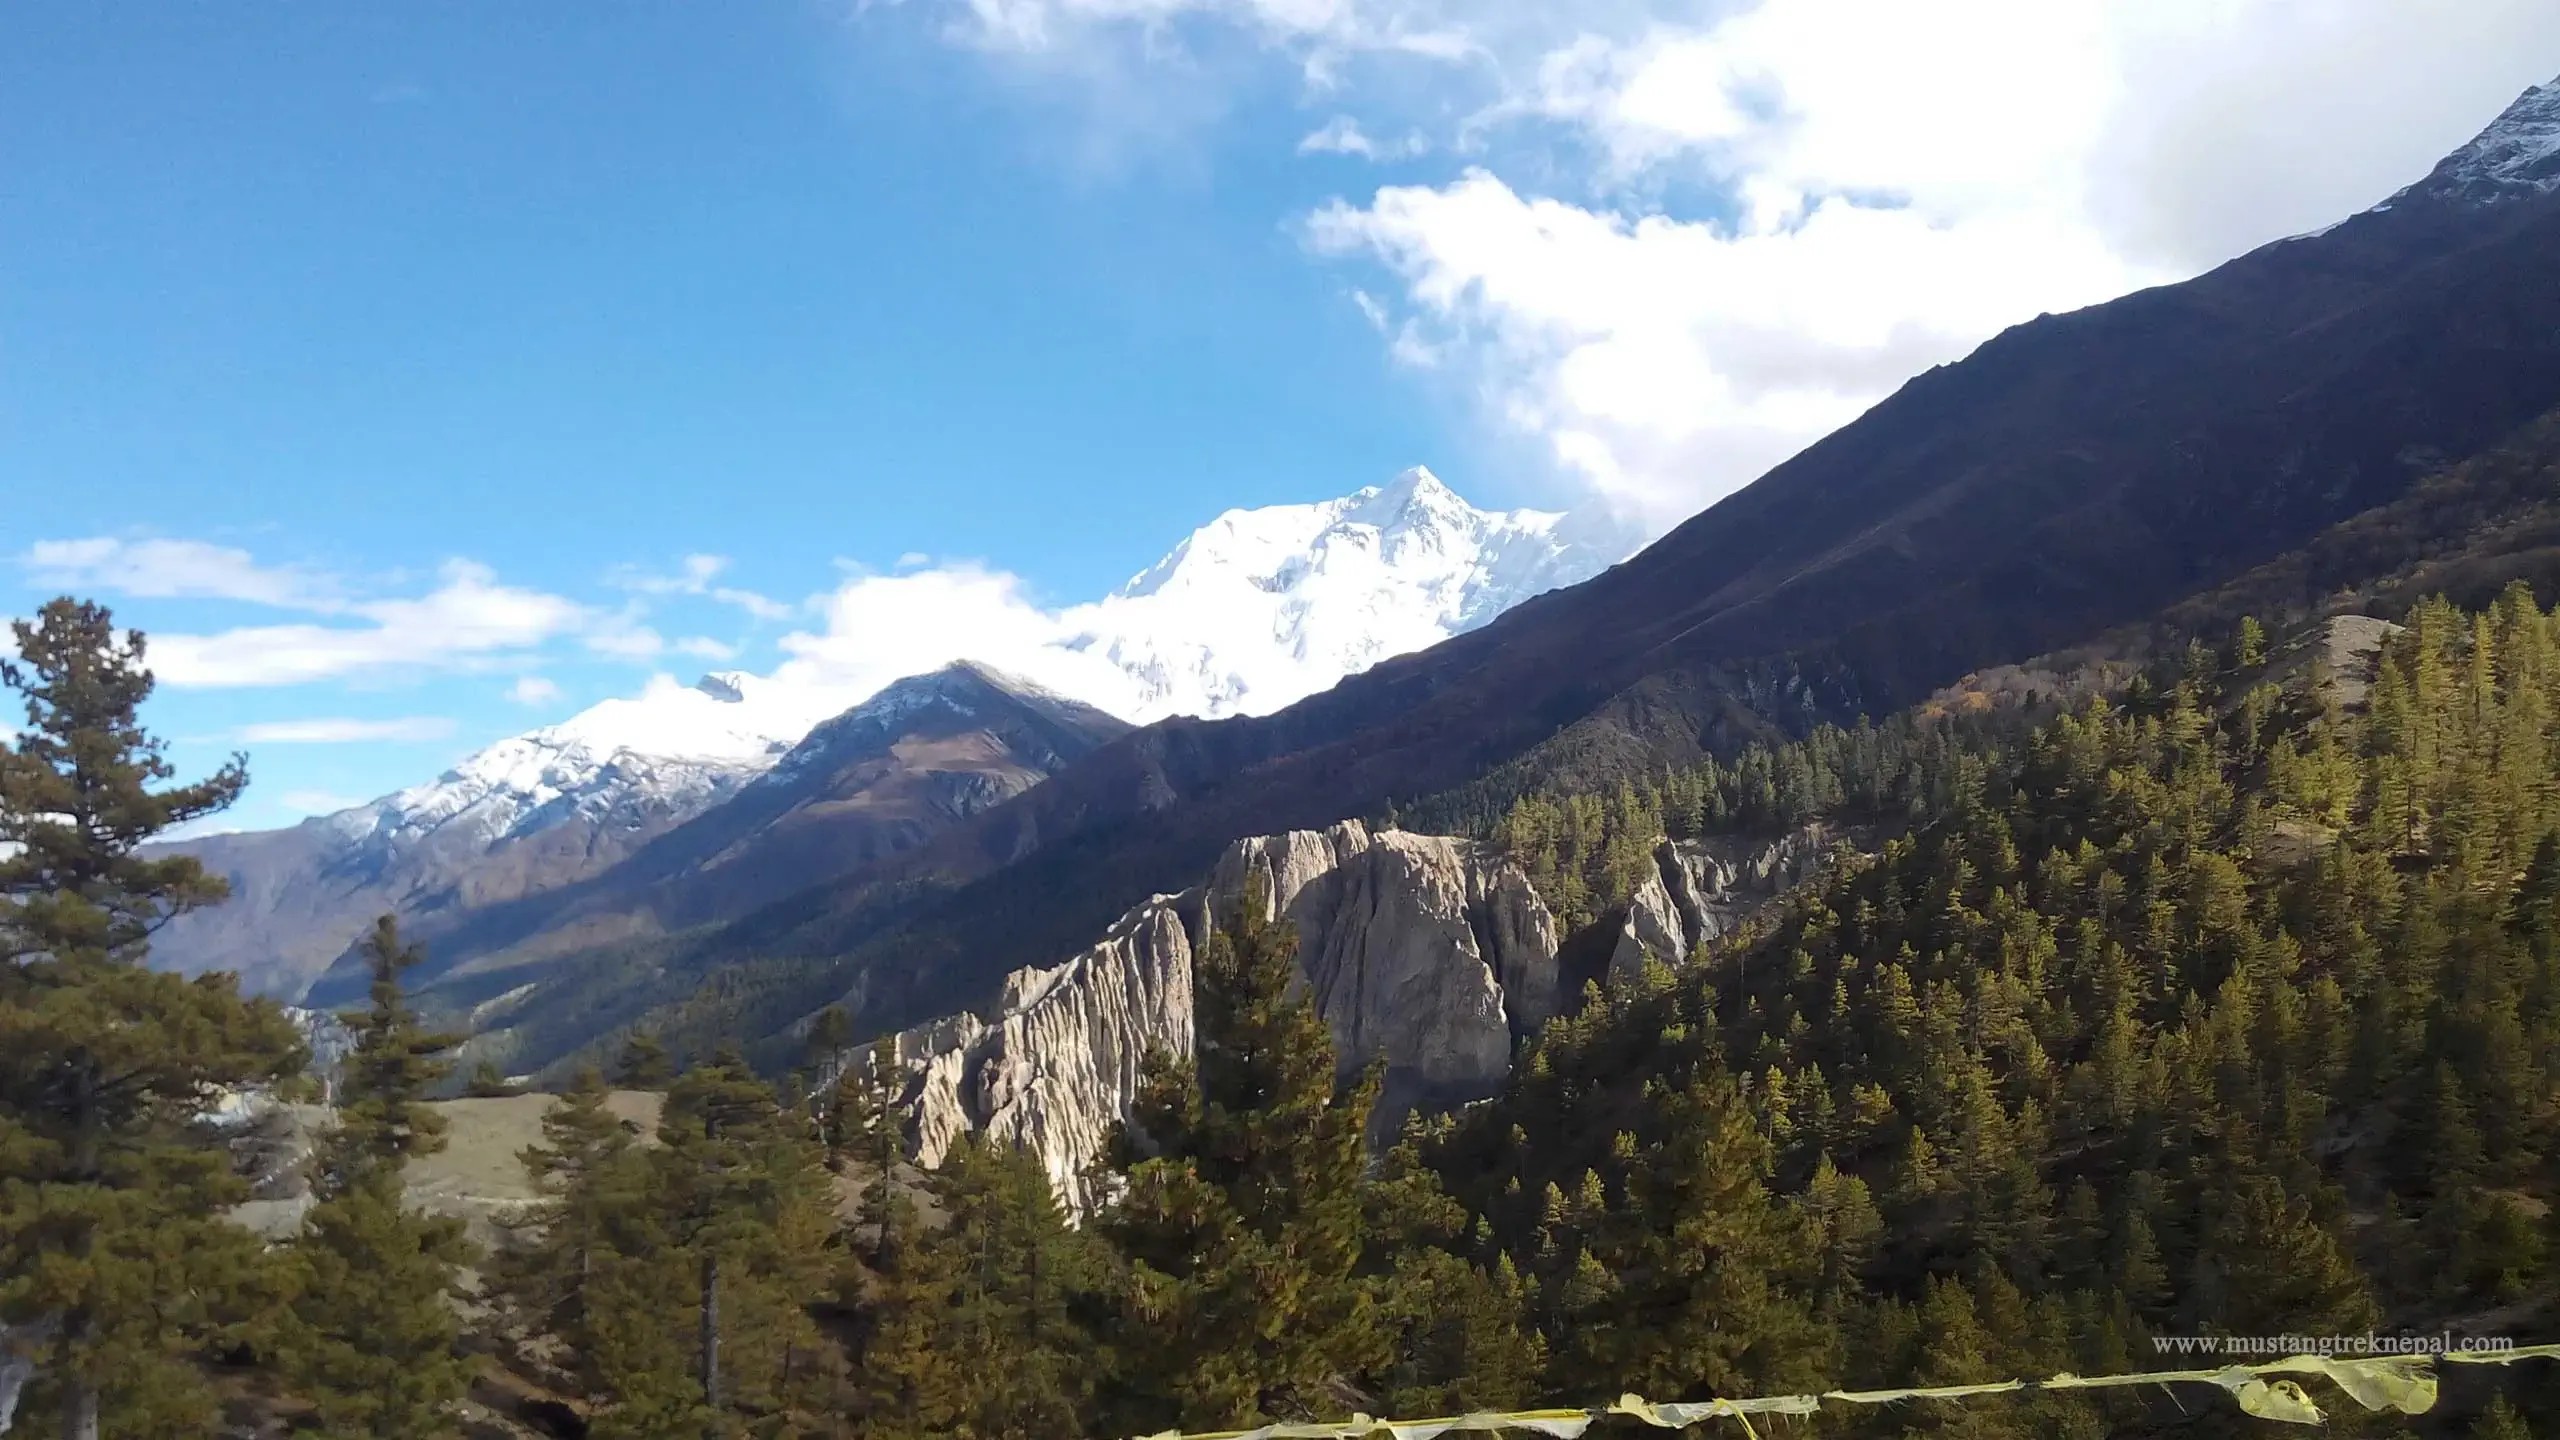 Nar Phu valley trek cost, permit for Nar Phu valley Nepal